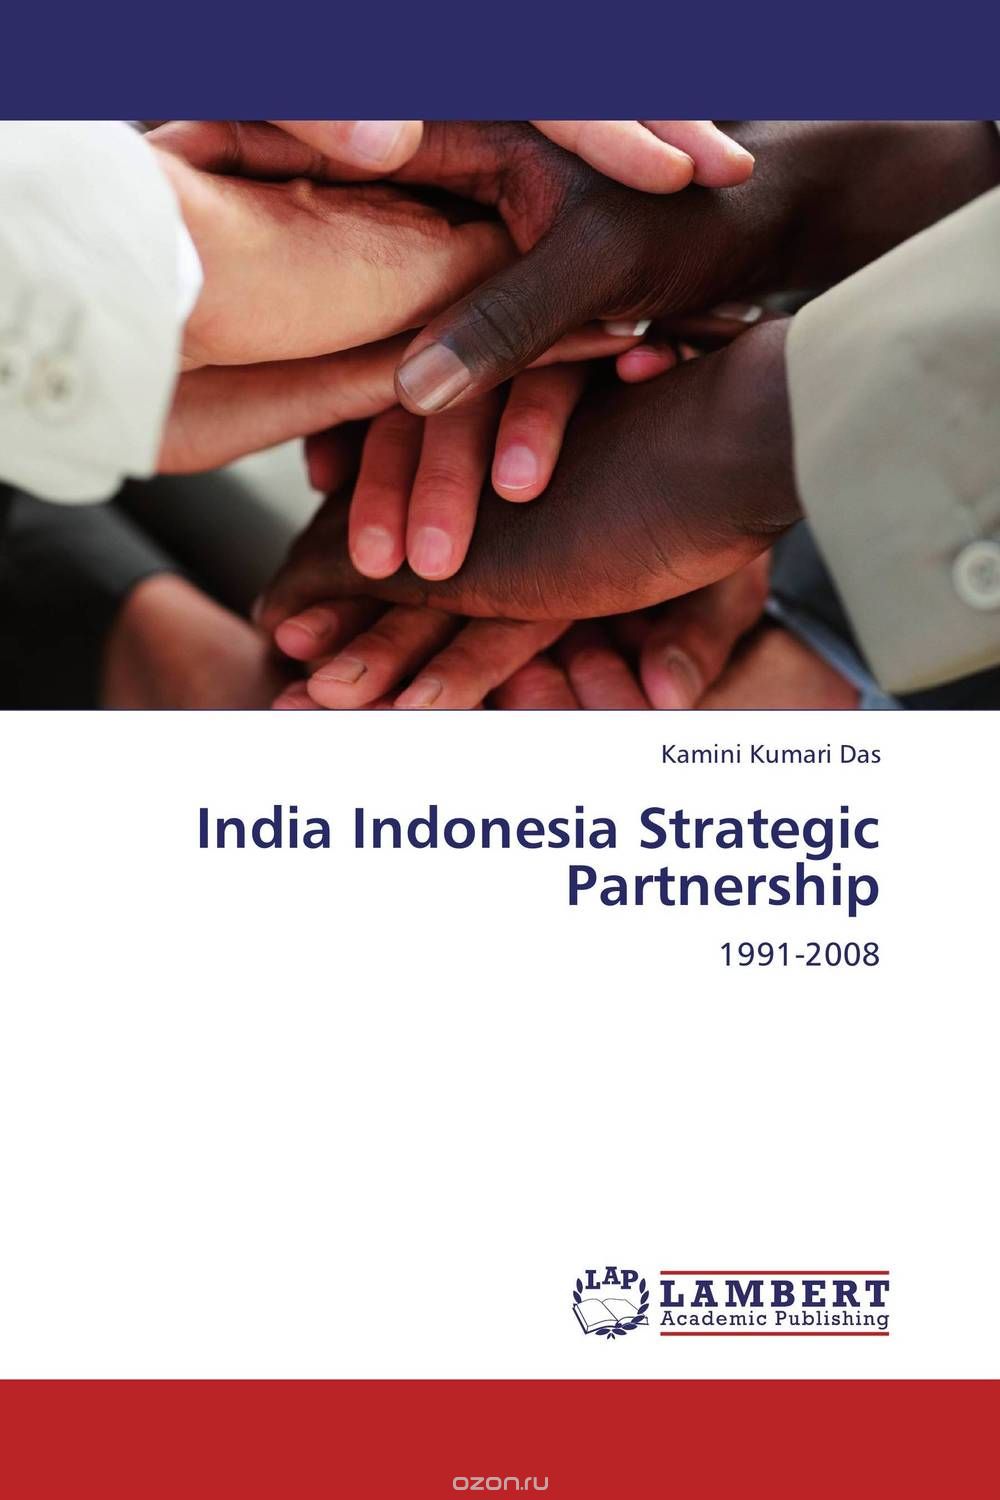 Скачать книгу "India Indonesia Strategic Partnership"